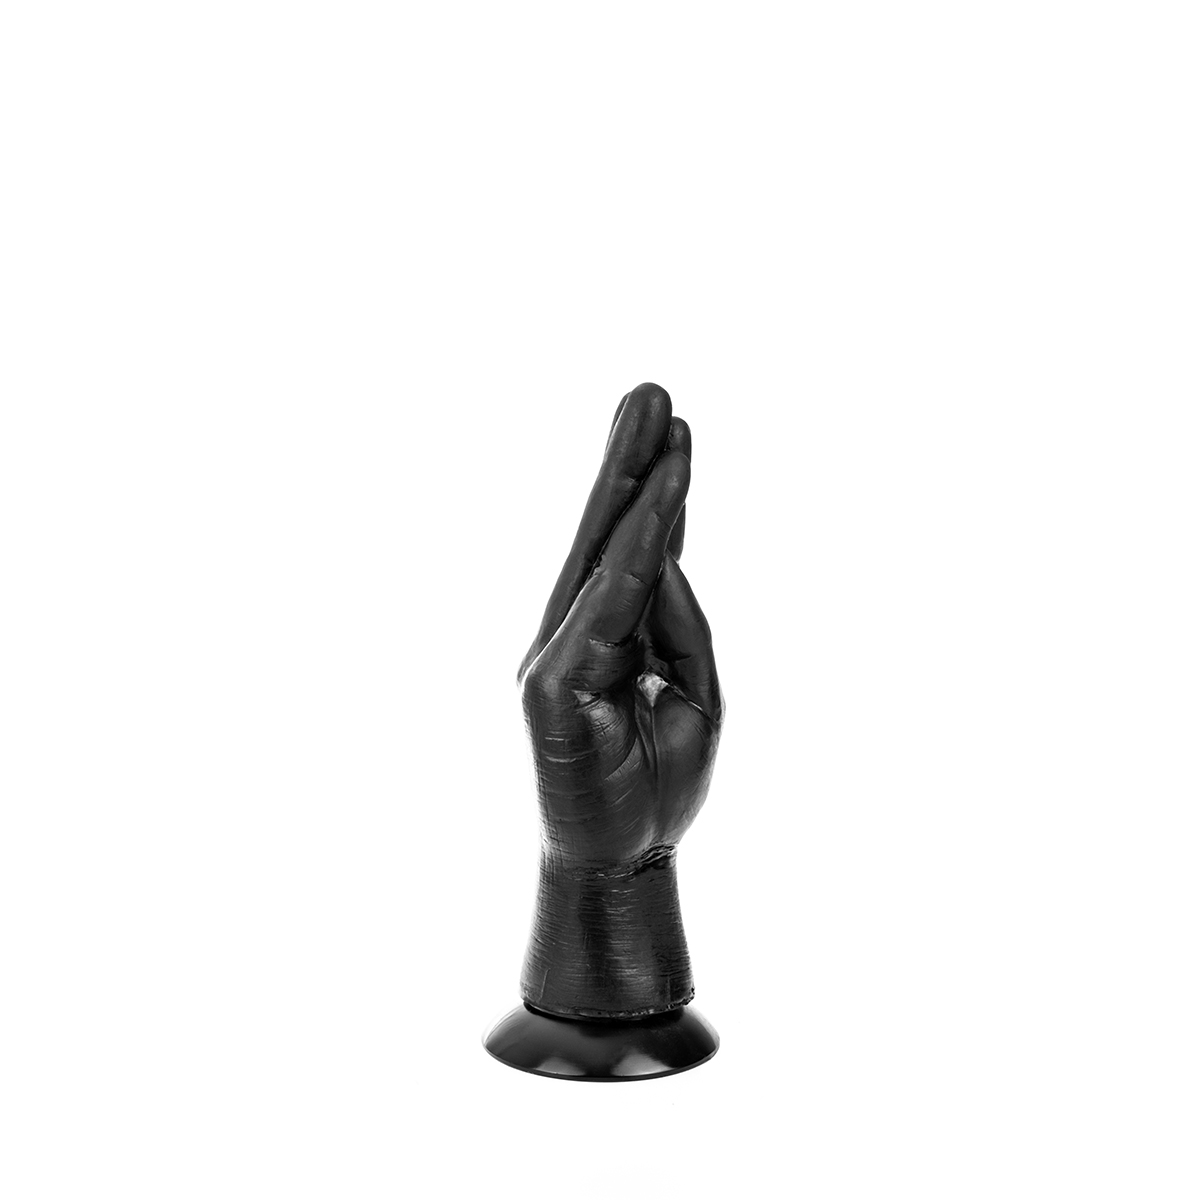 Dinoo King-Size – Hand Small Black